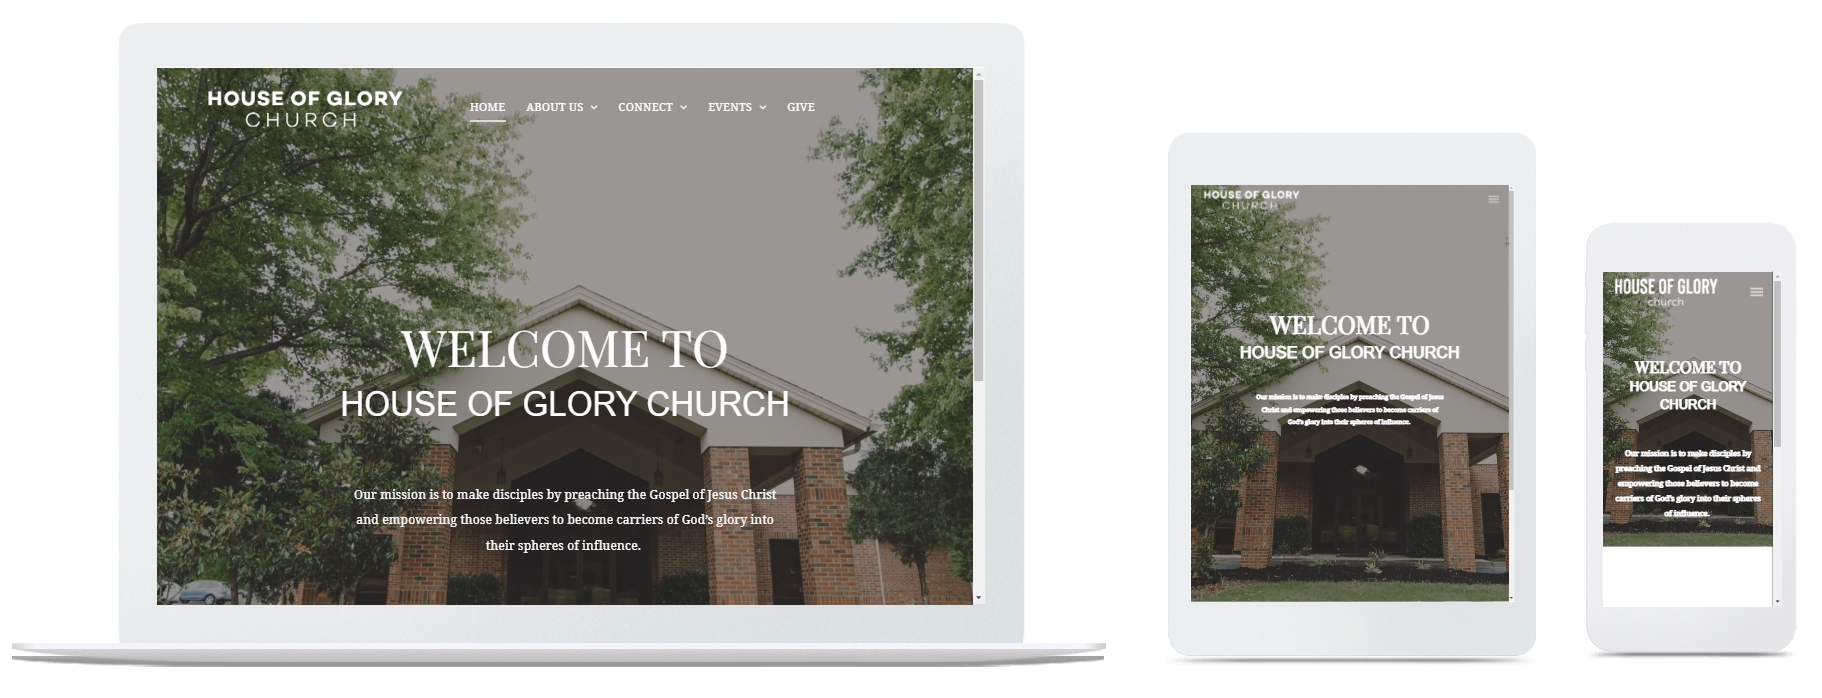 House of Glory Church Niko & Mar Web Design